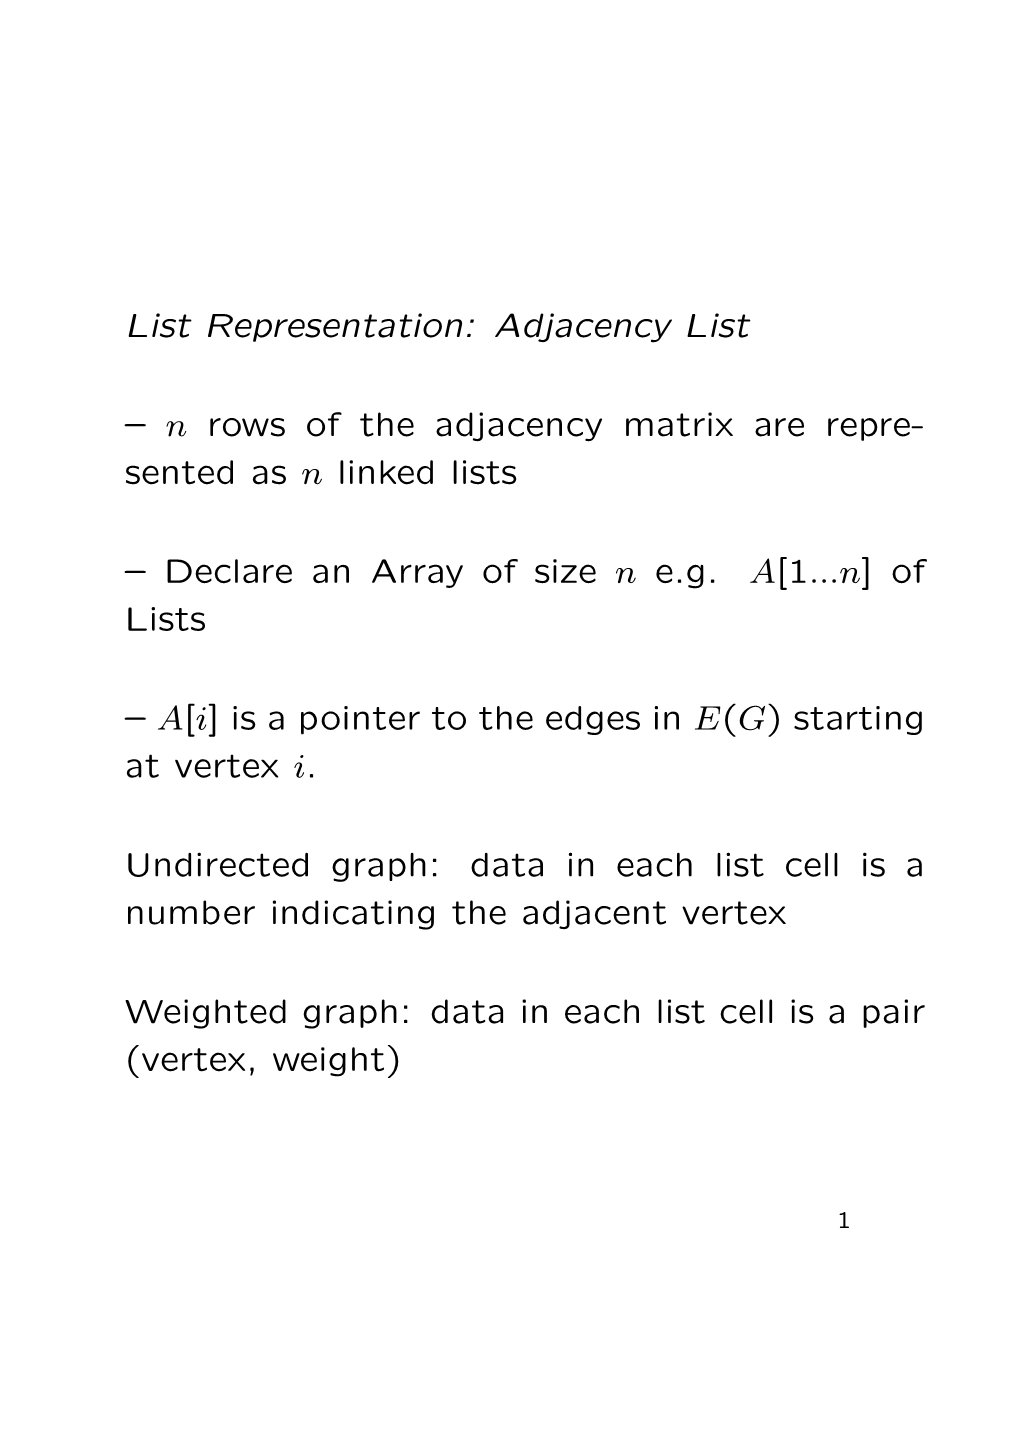 List Representation: Adjacency List – N Rows of the Adjacency Matrix Are